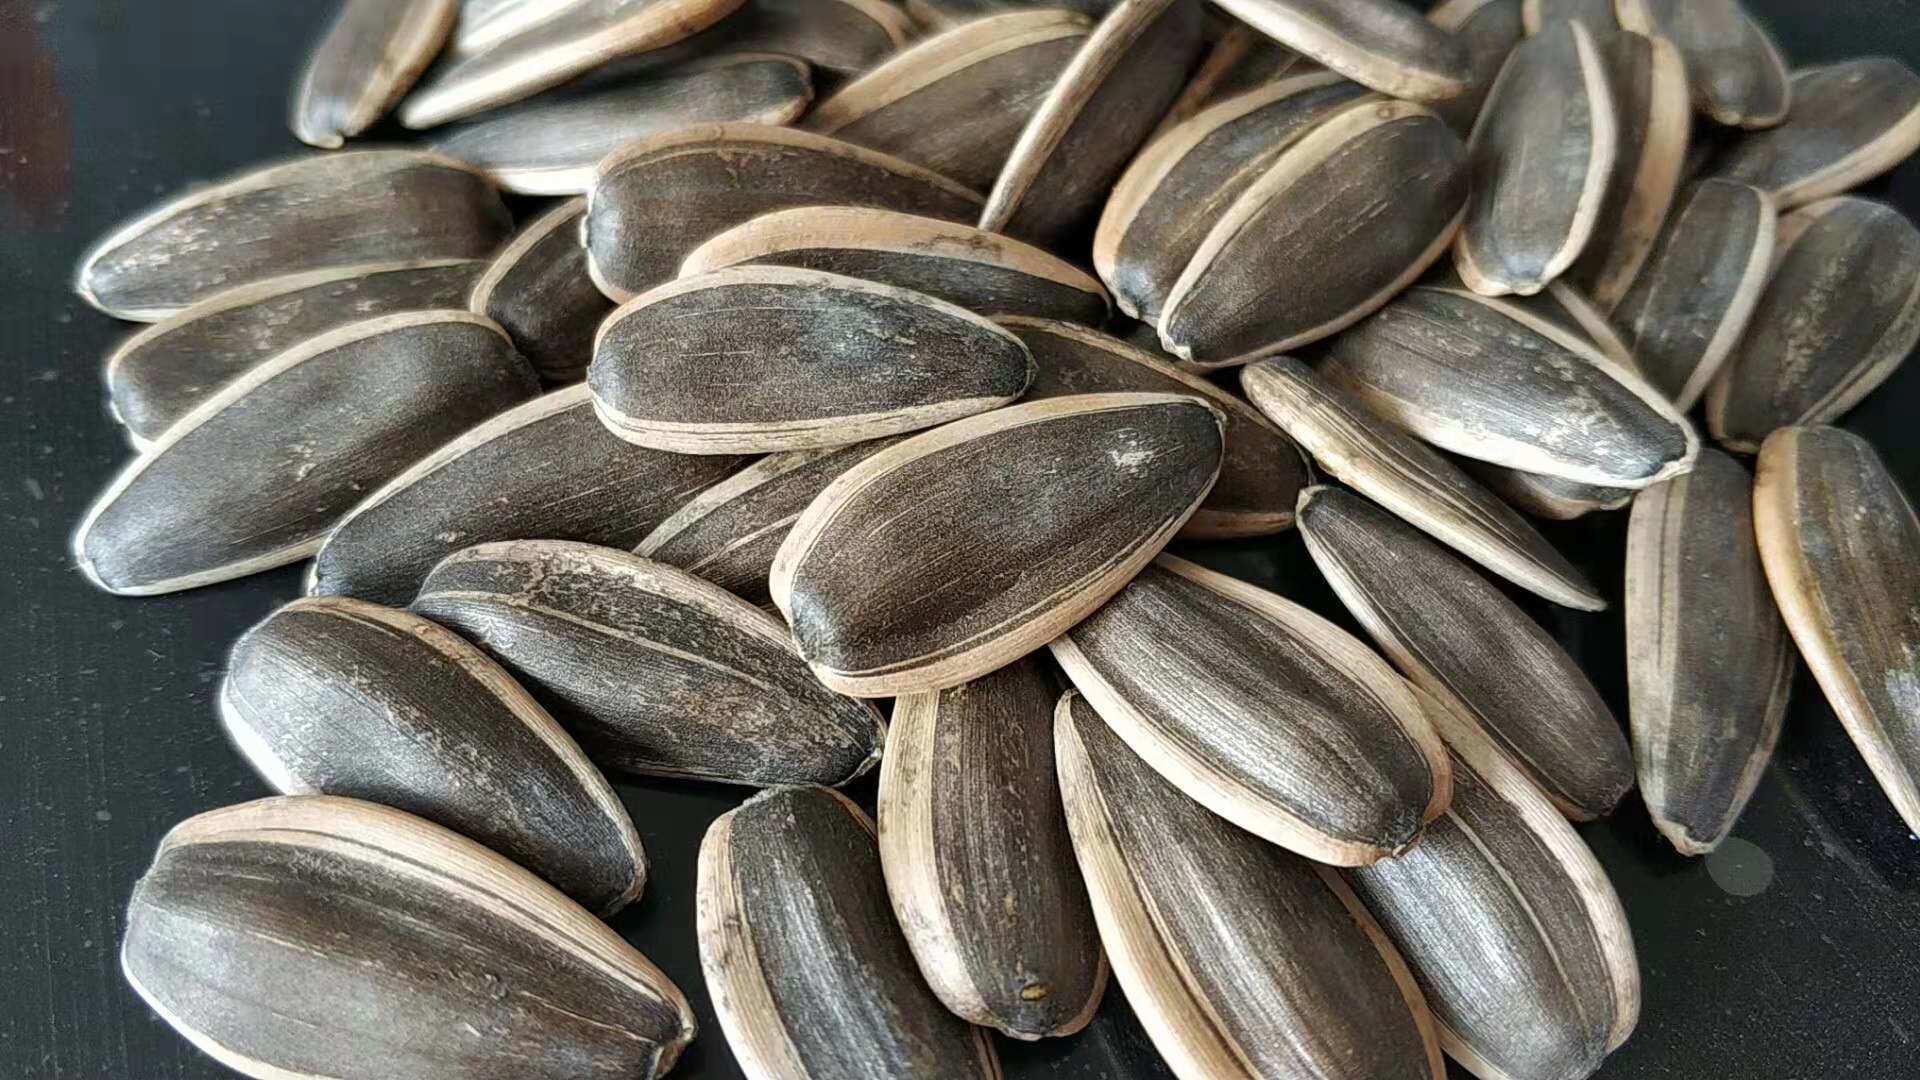 Georgia reveals volume of exported sunflower seeds